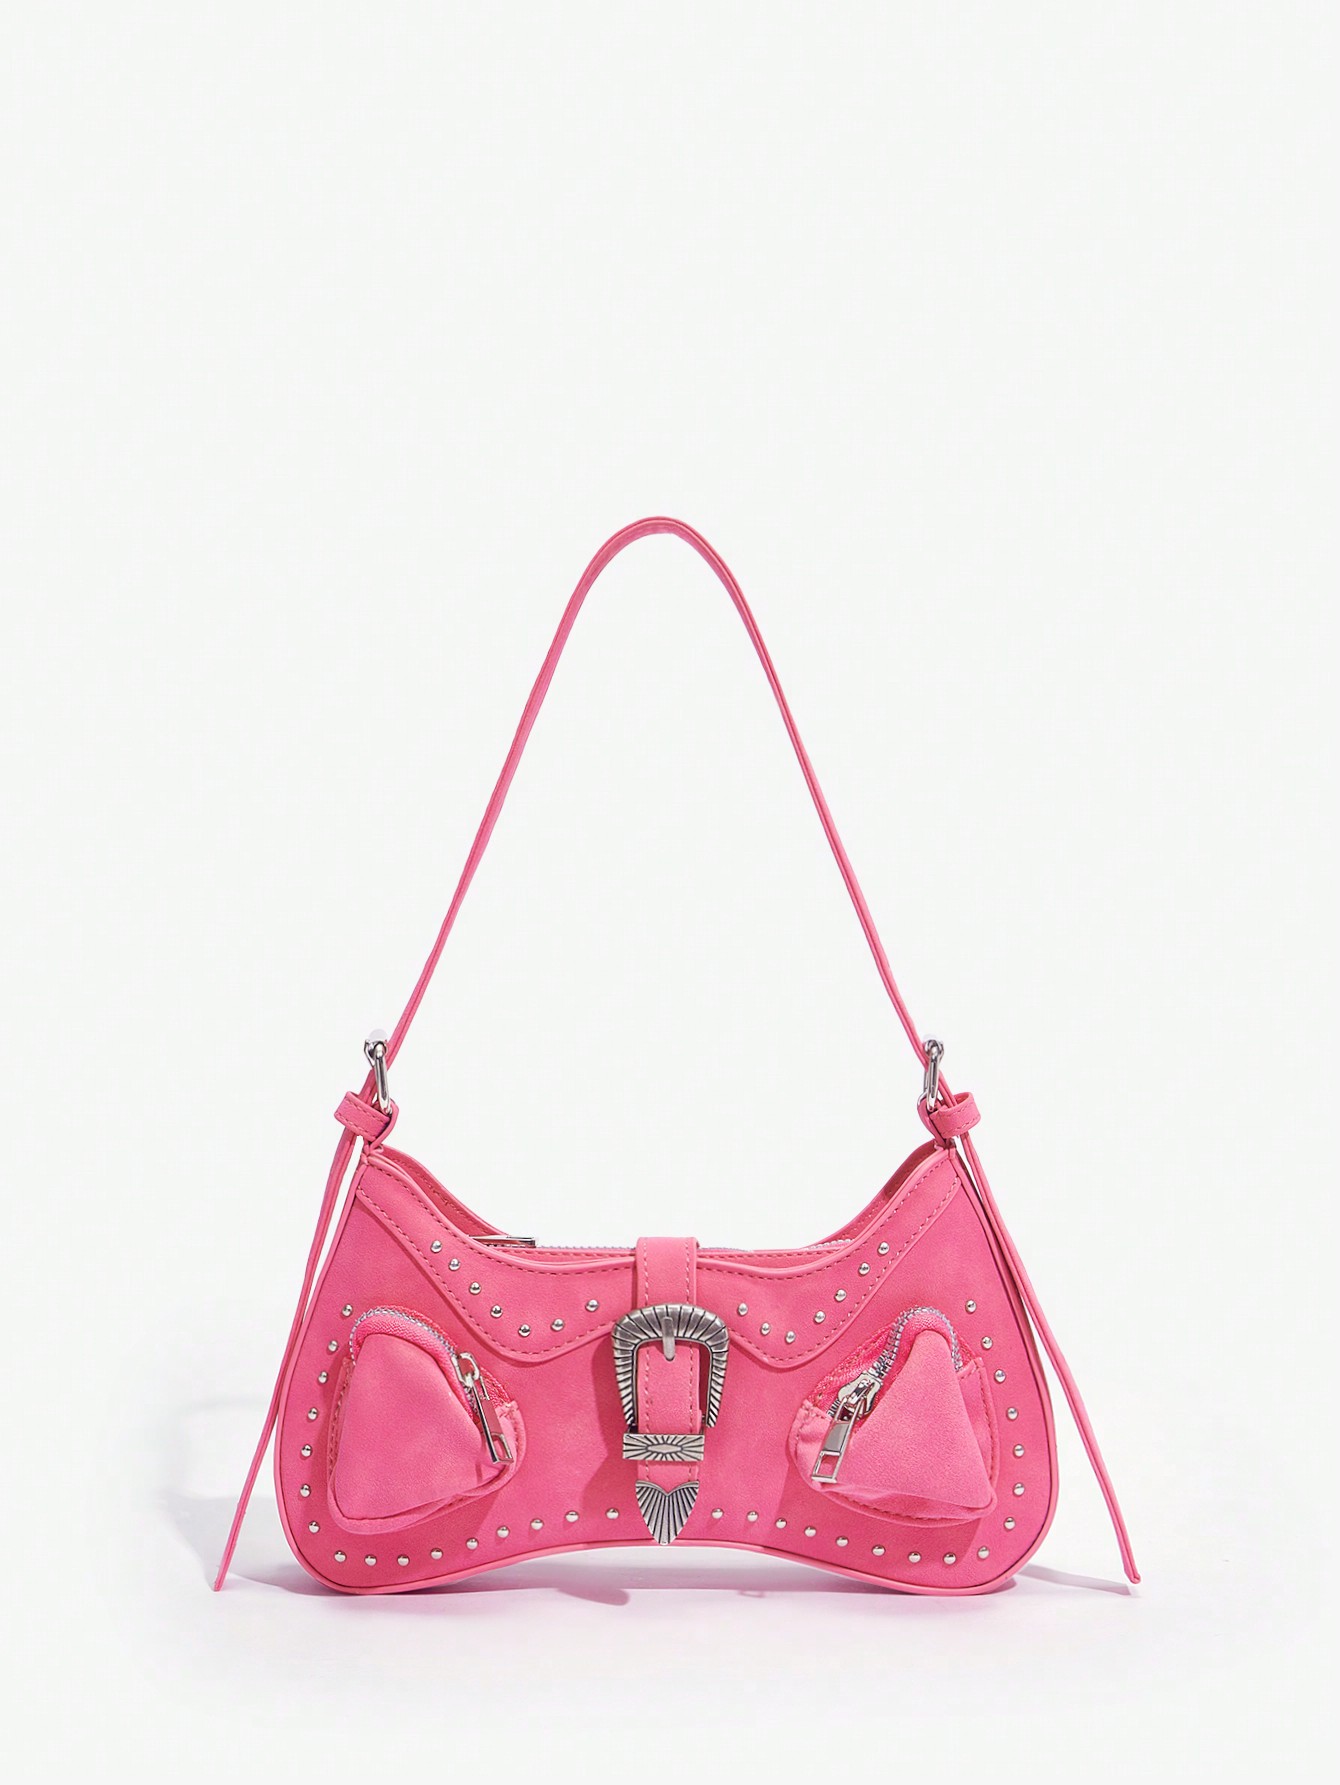 SHEIN ICON Женская модная винтажная красная сумка через плечо с заклепками, розовый shein icon street style многоцветный